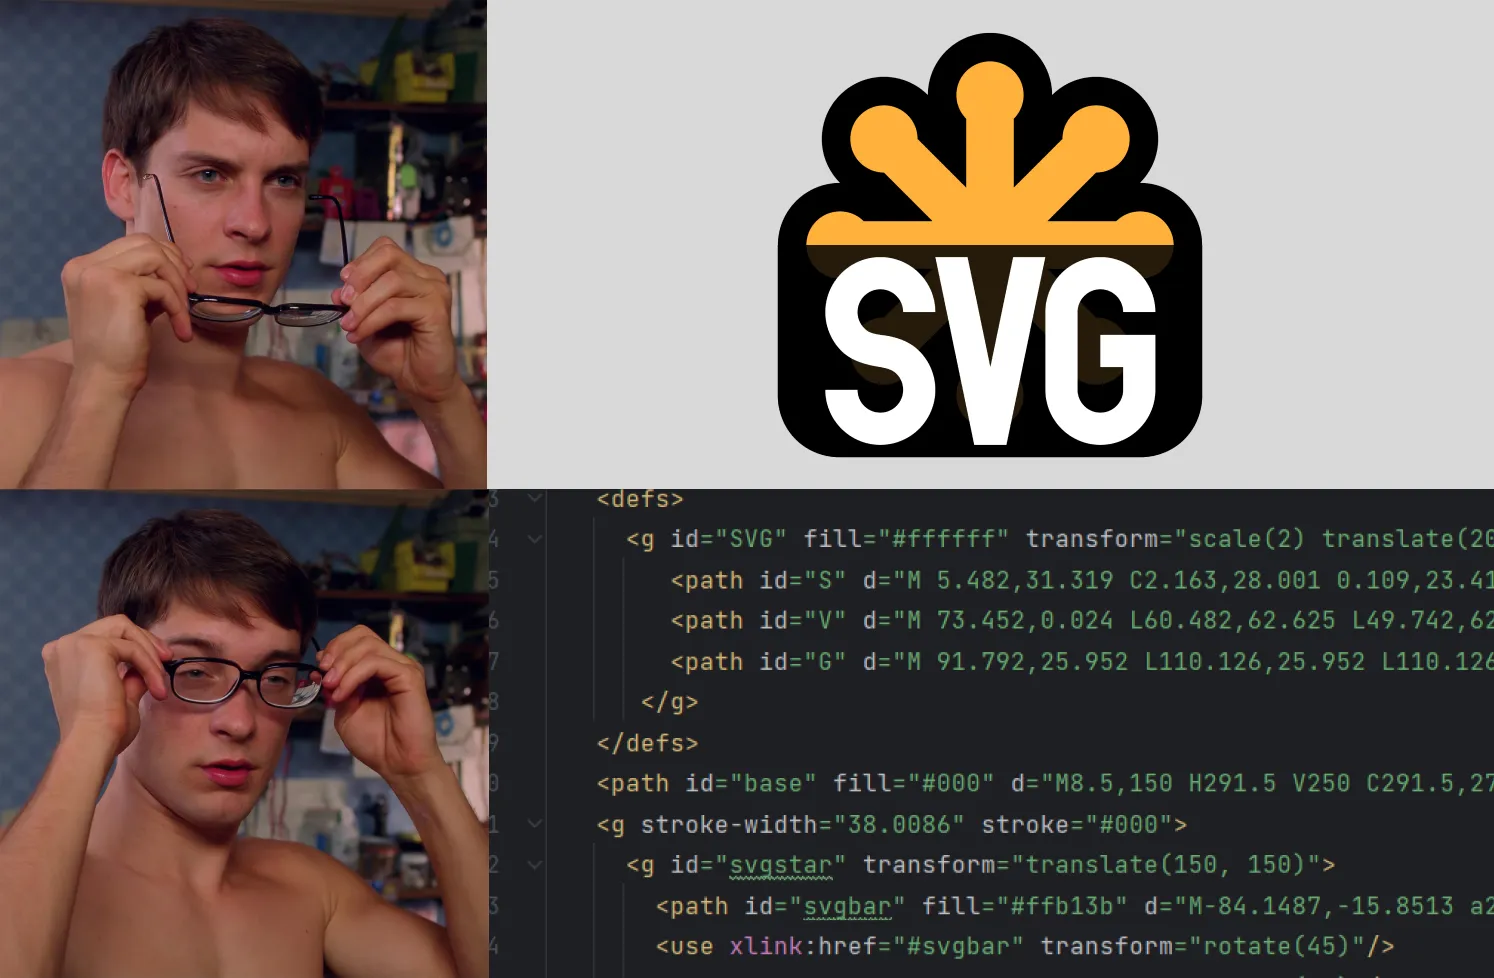 SVG is math